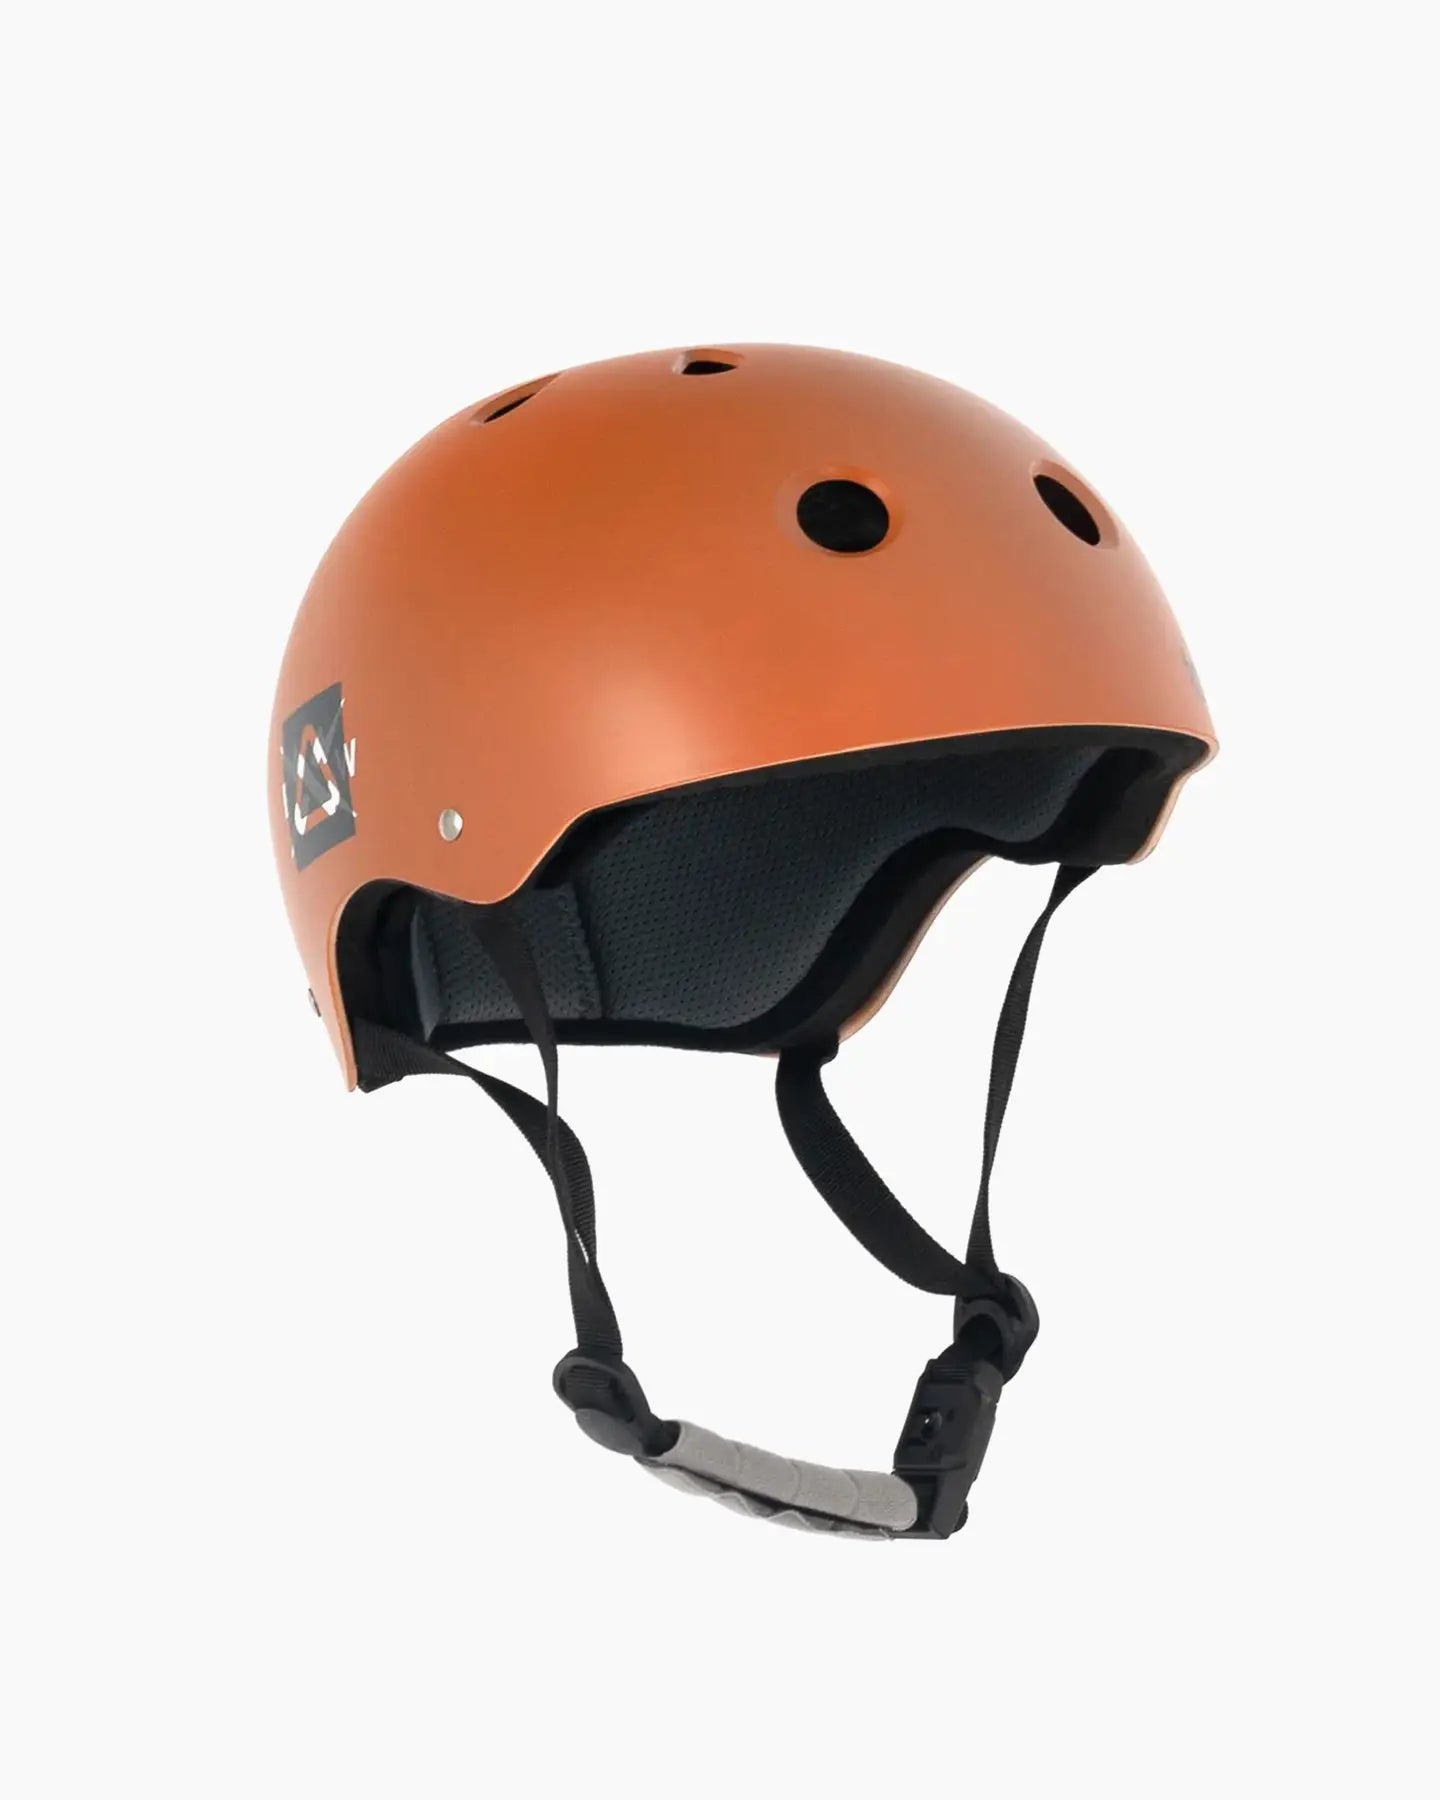 Follow Pro Helmet - Tobacco front